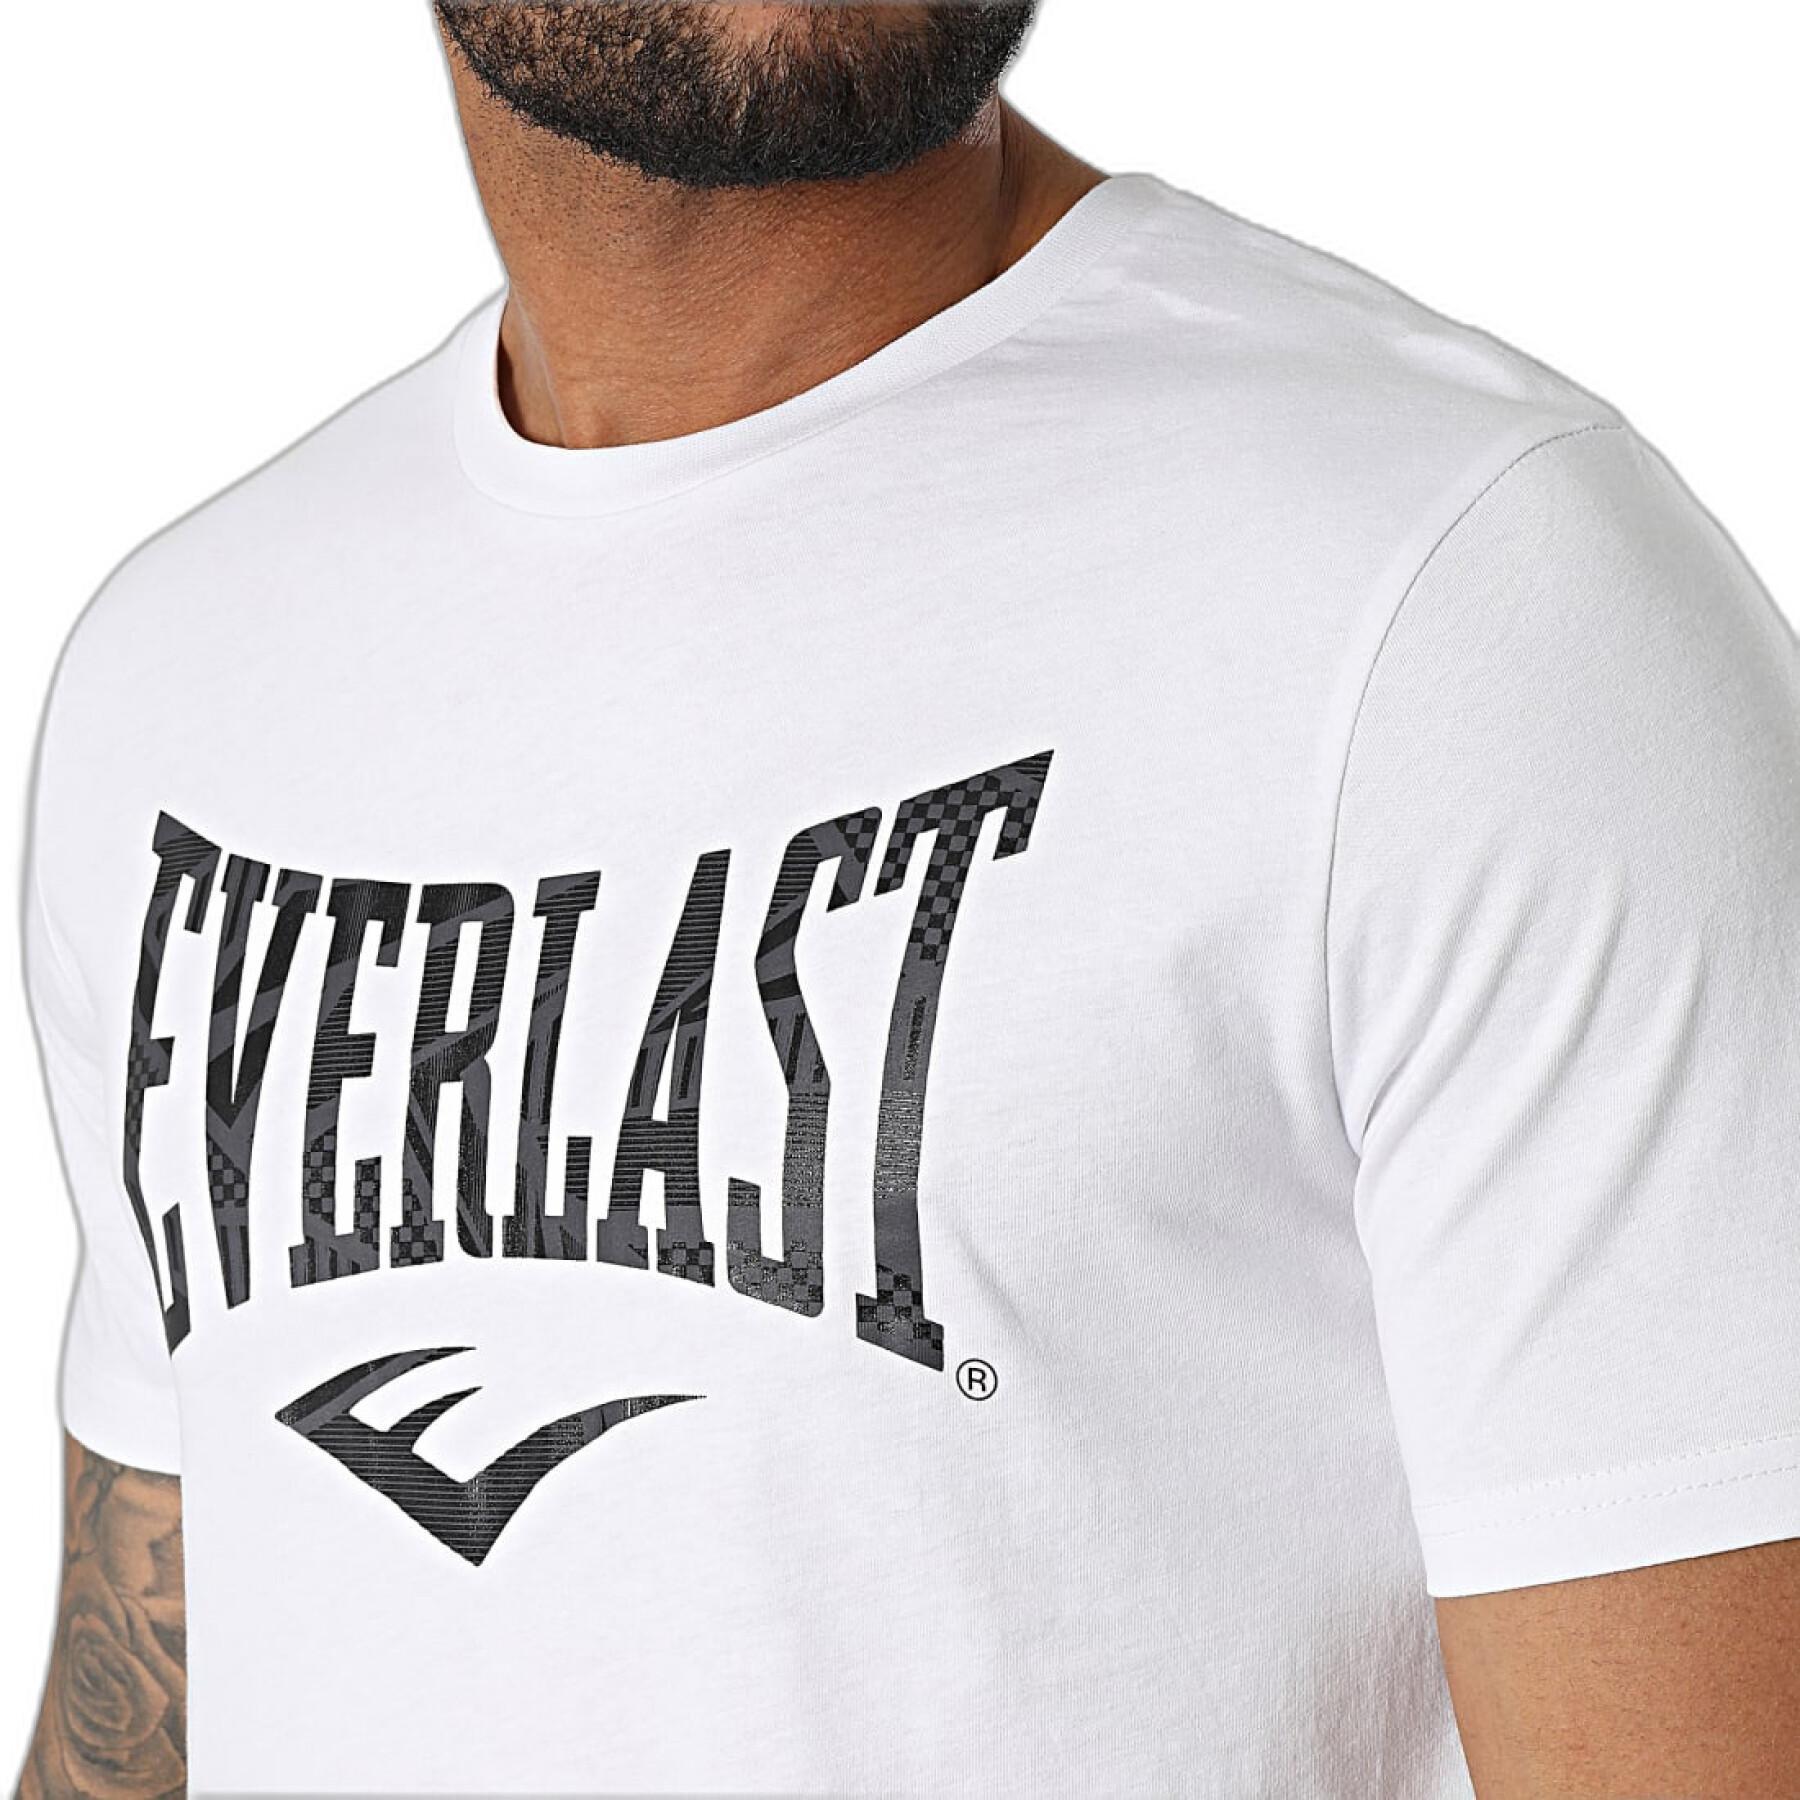 T-shirt Everlast Spark Graphic